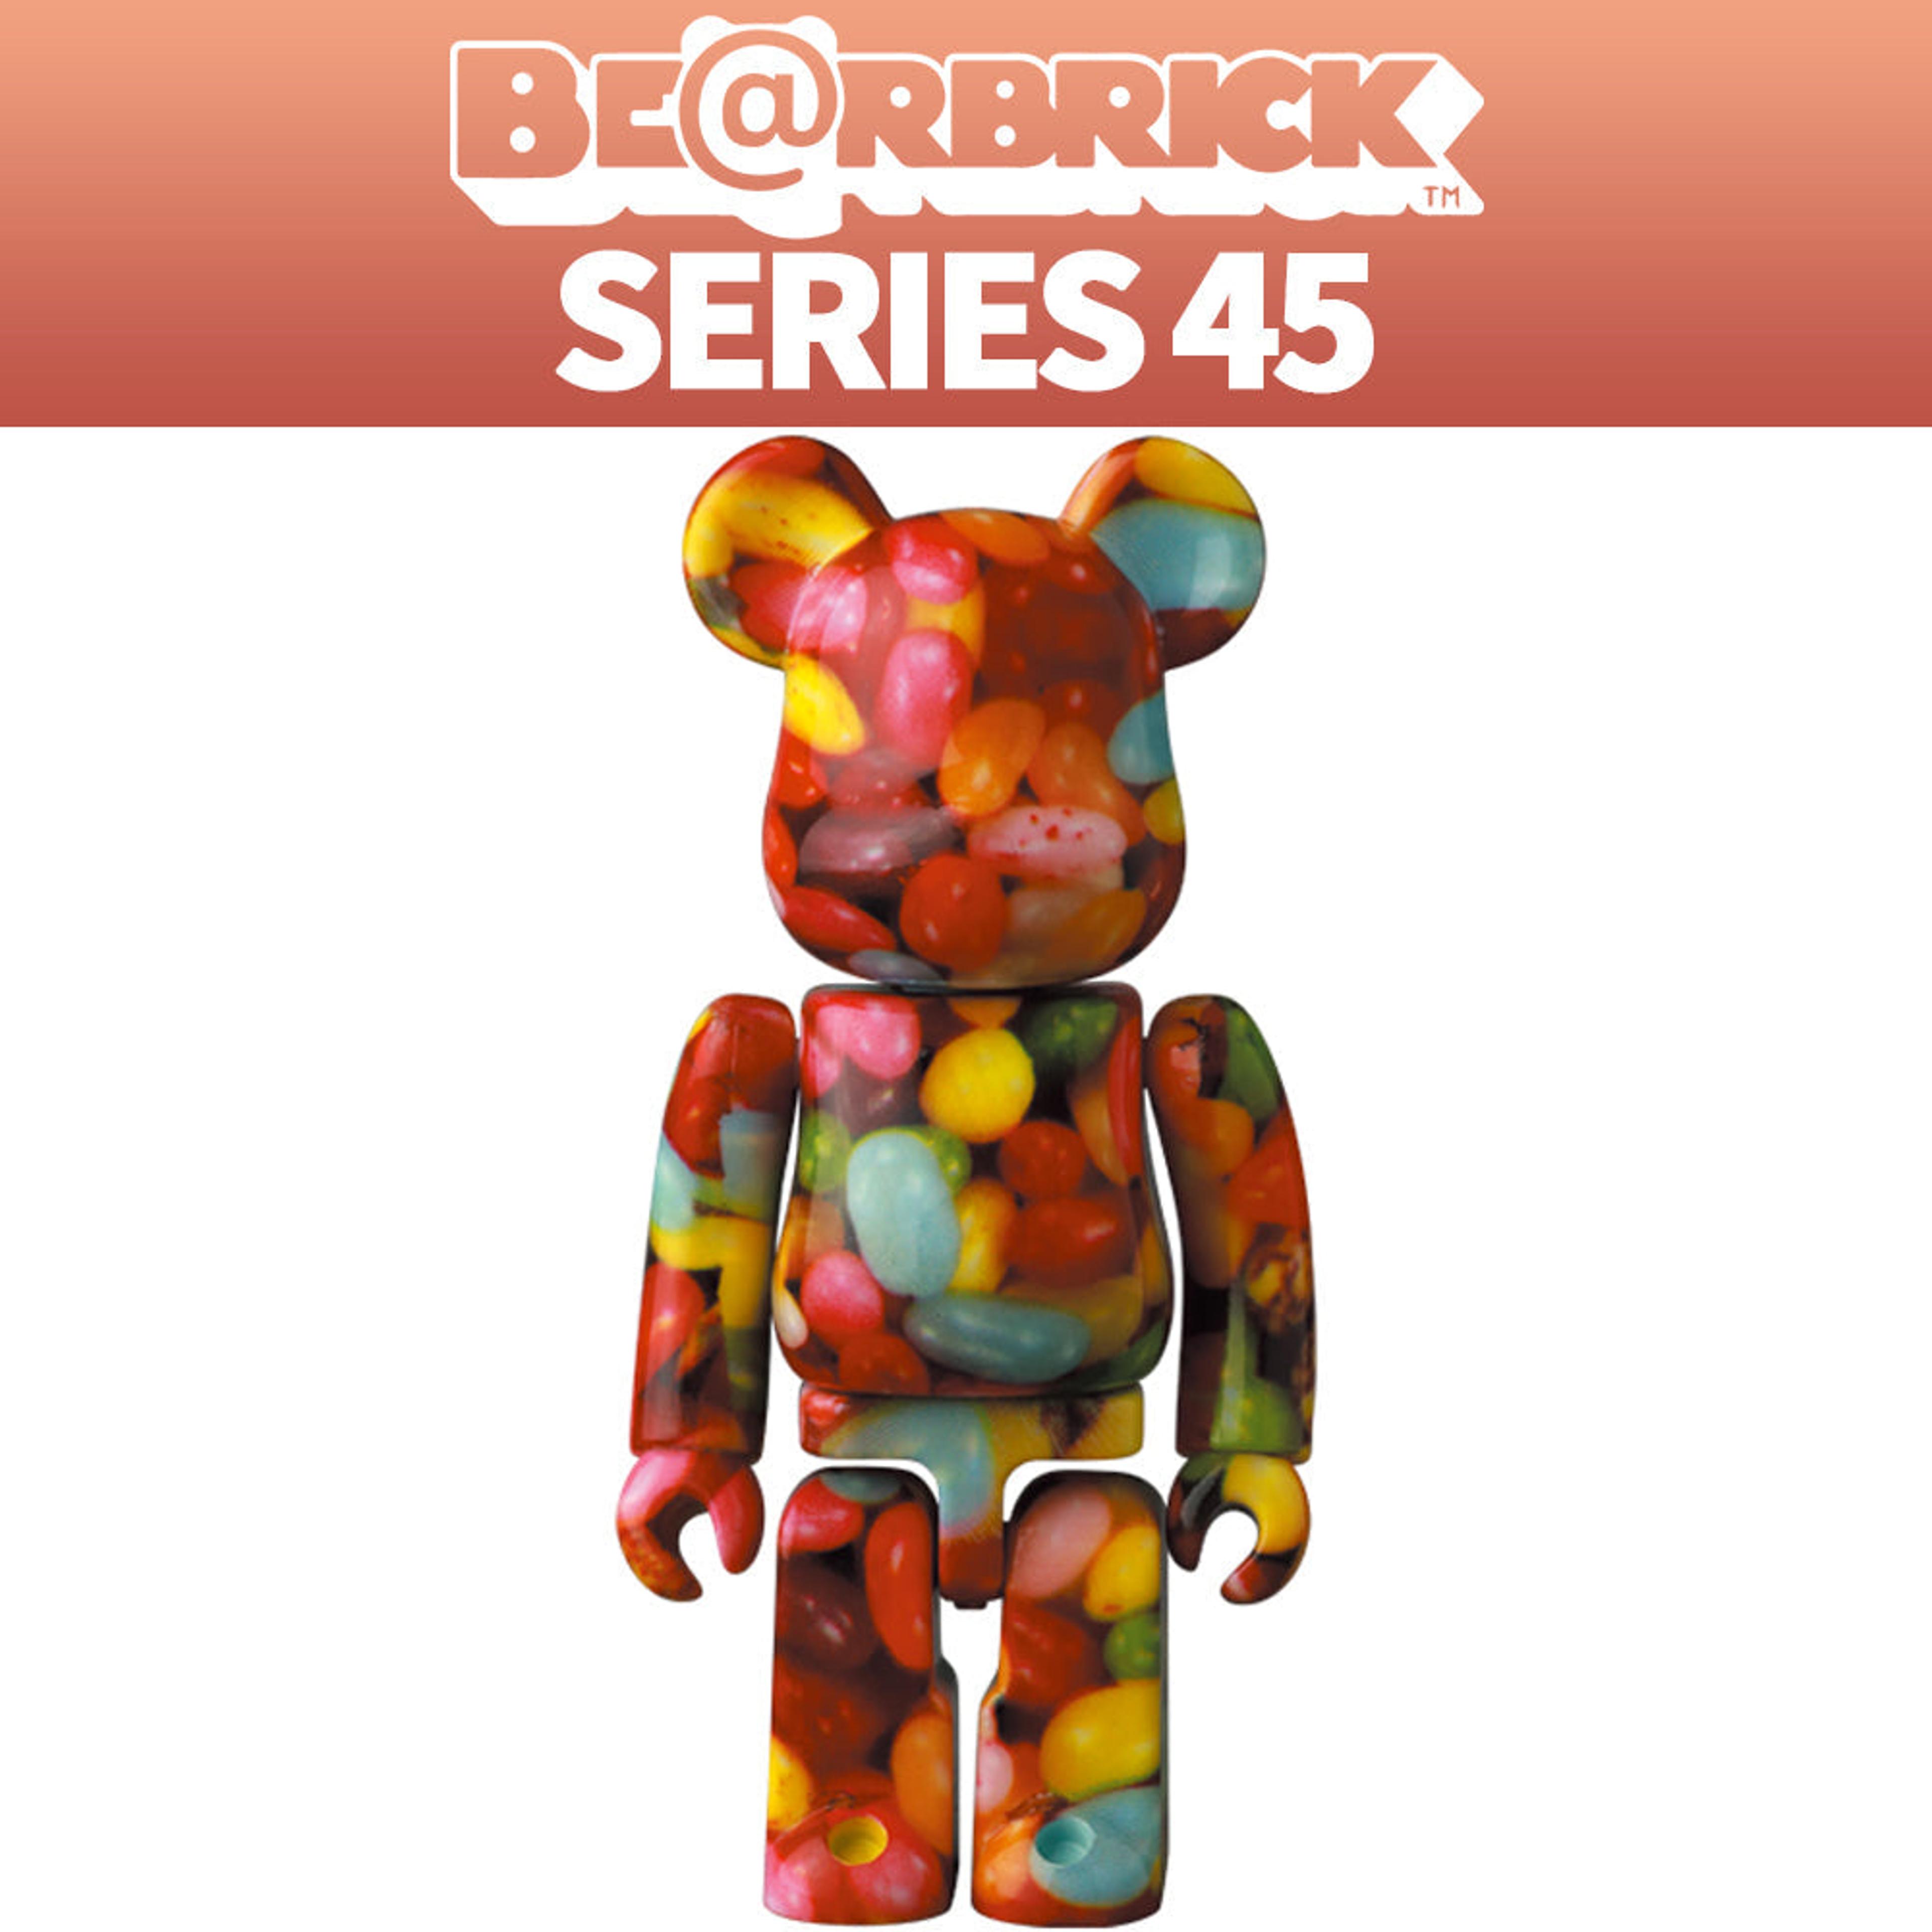 Alternate View 2 of Bearbrick Series 45 Blind Box by Medicom Toy